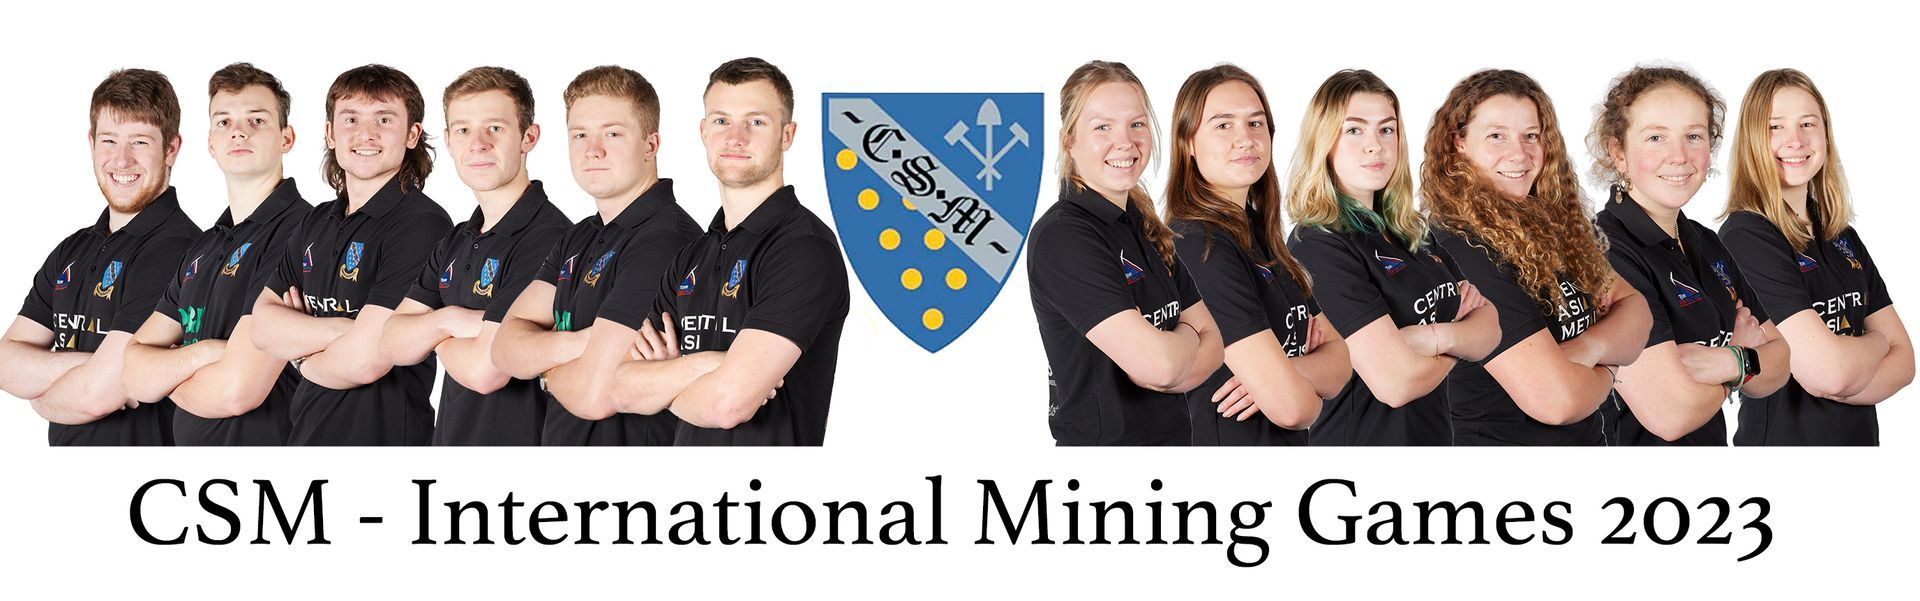 CSM International Mining Games team 2023